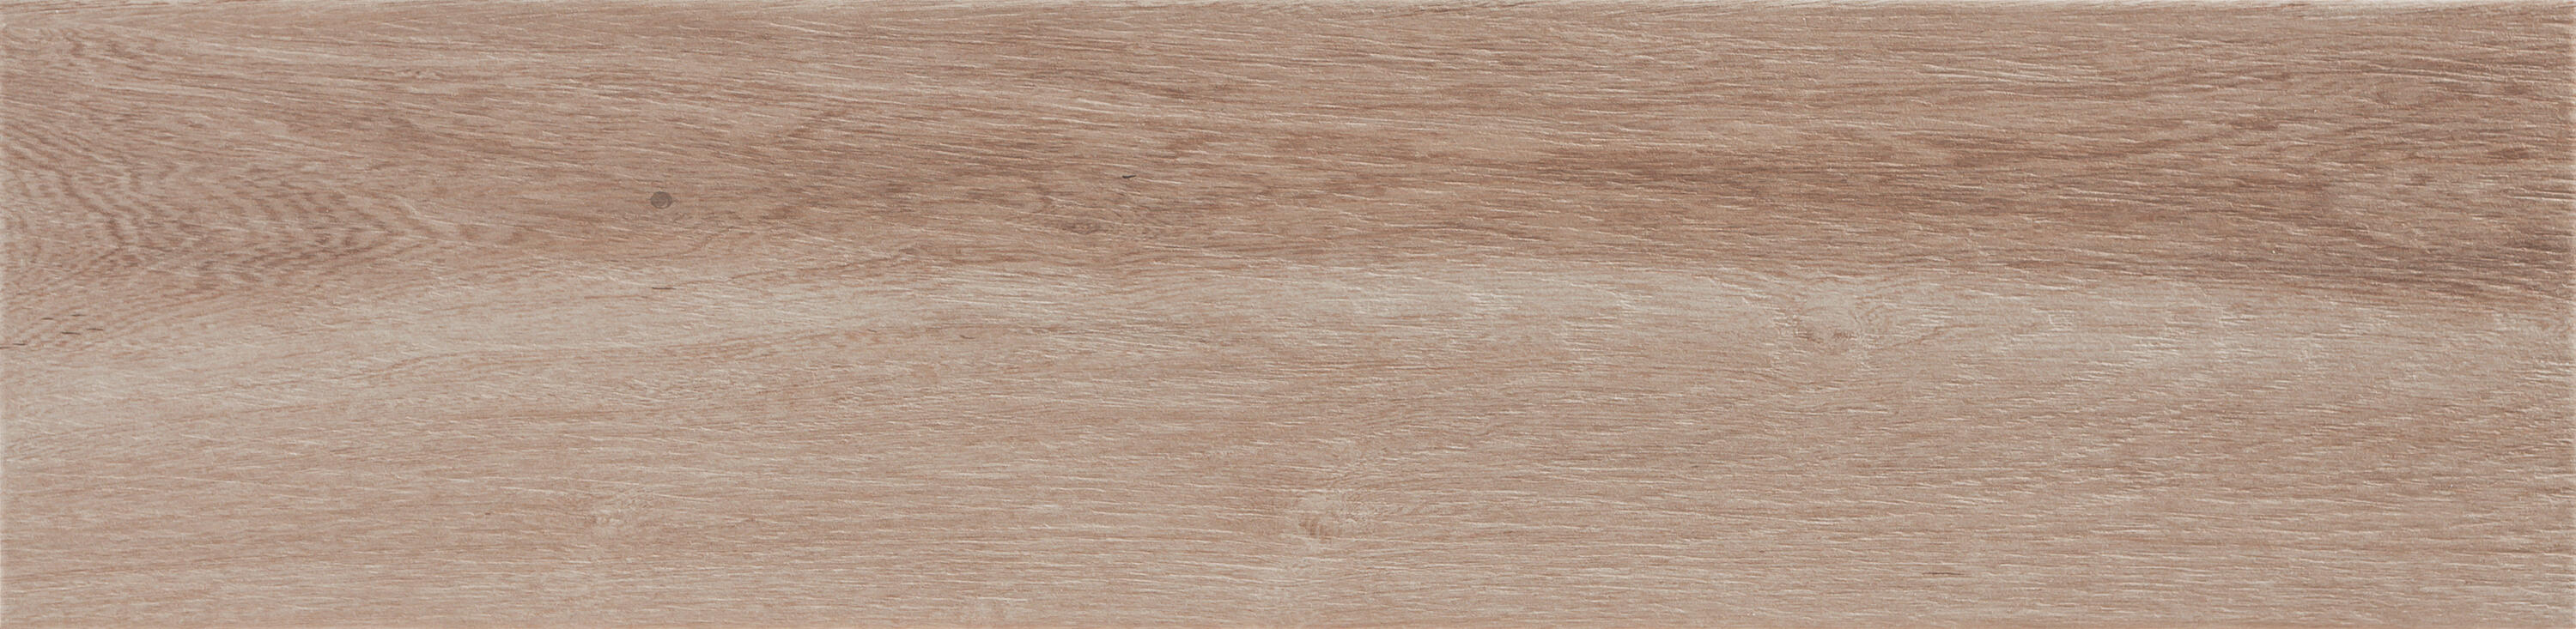 Suelo/azulejo porcelánico keywood efecto madera beige 22.5x90 cm c1